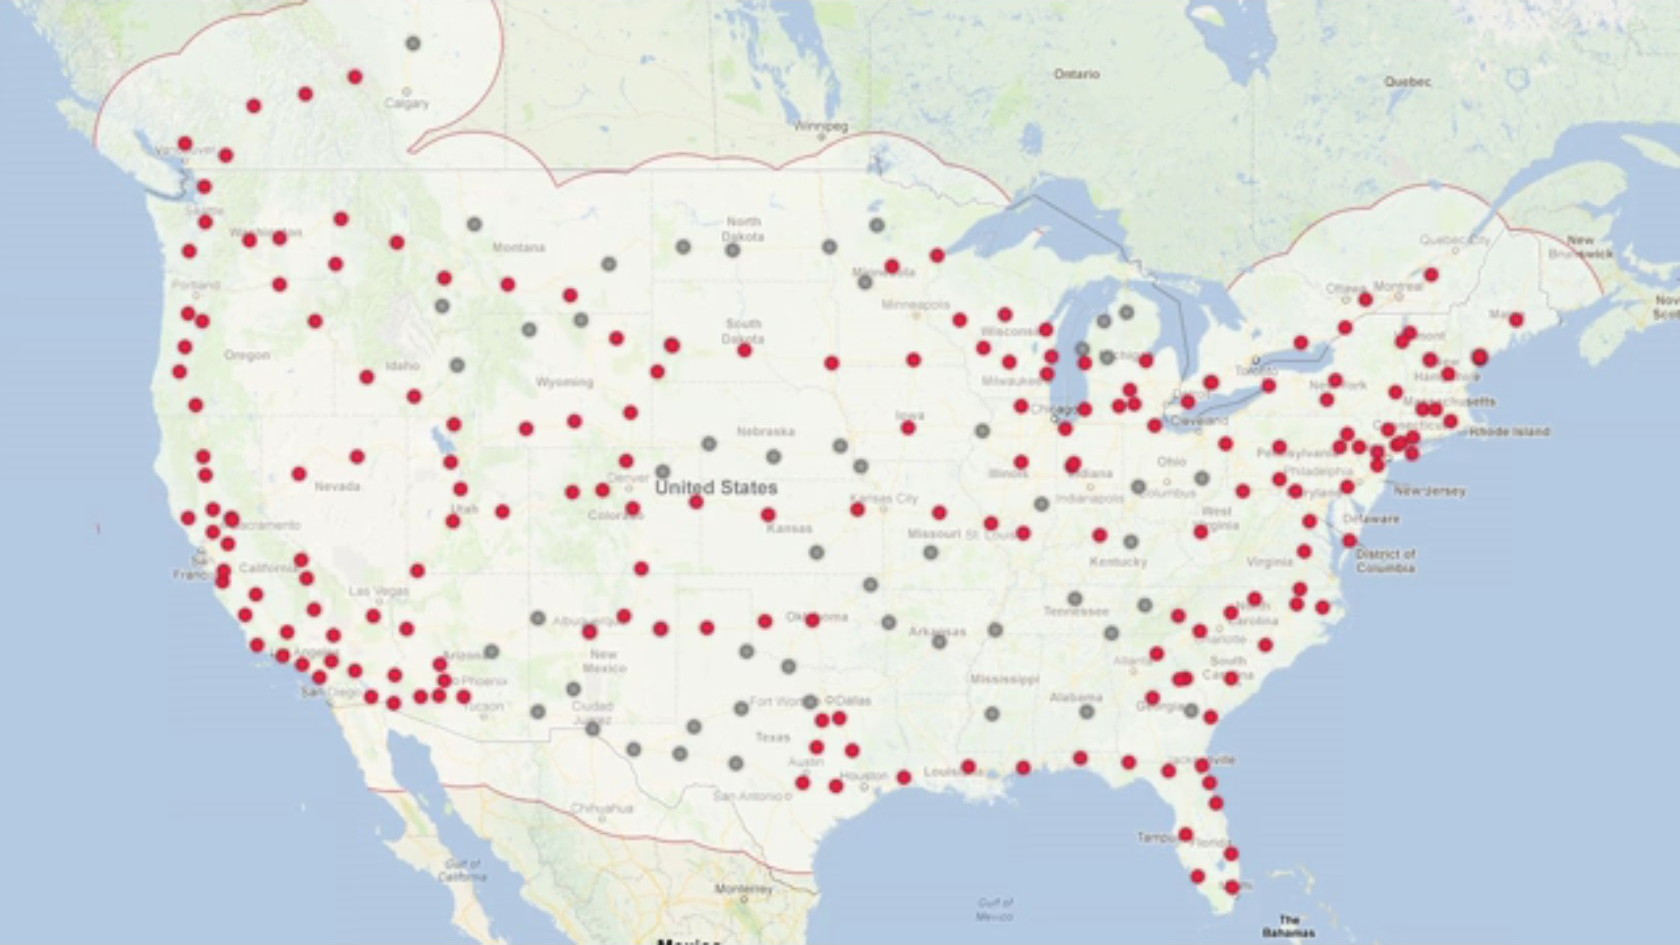 Tesla Motors Supercharger Network In 2015  -  released May 2013